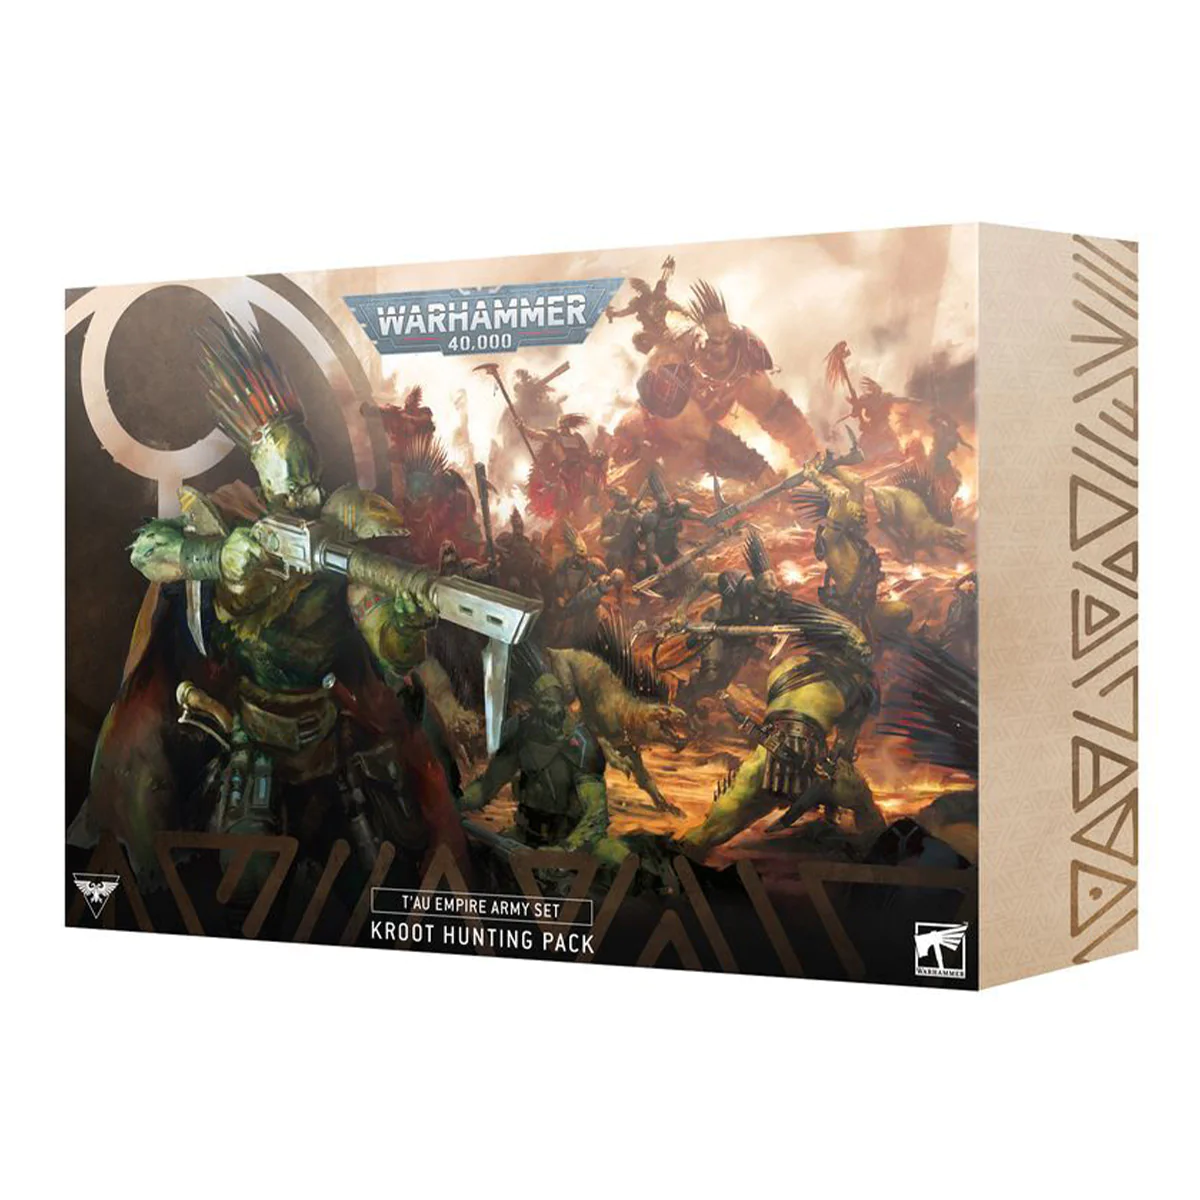 Warhammer 40K Tau Empire Army Set Kroot Hunting Pack